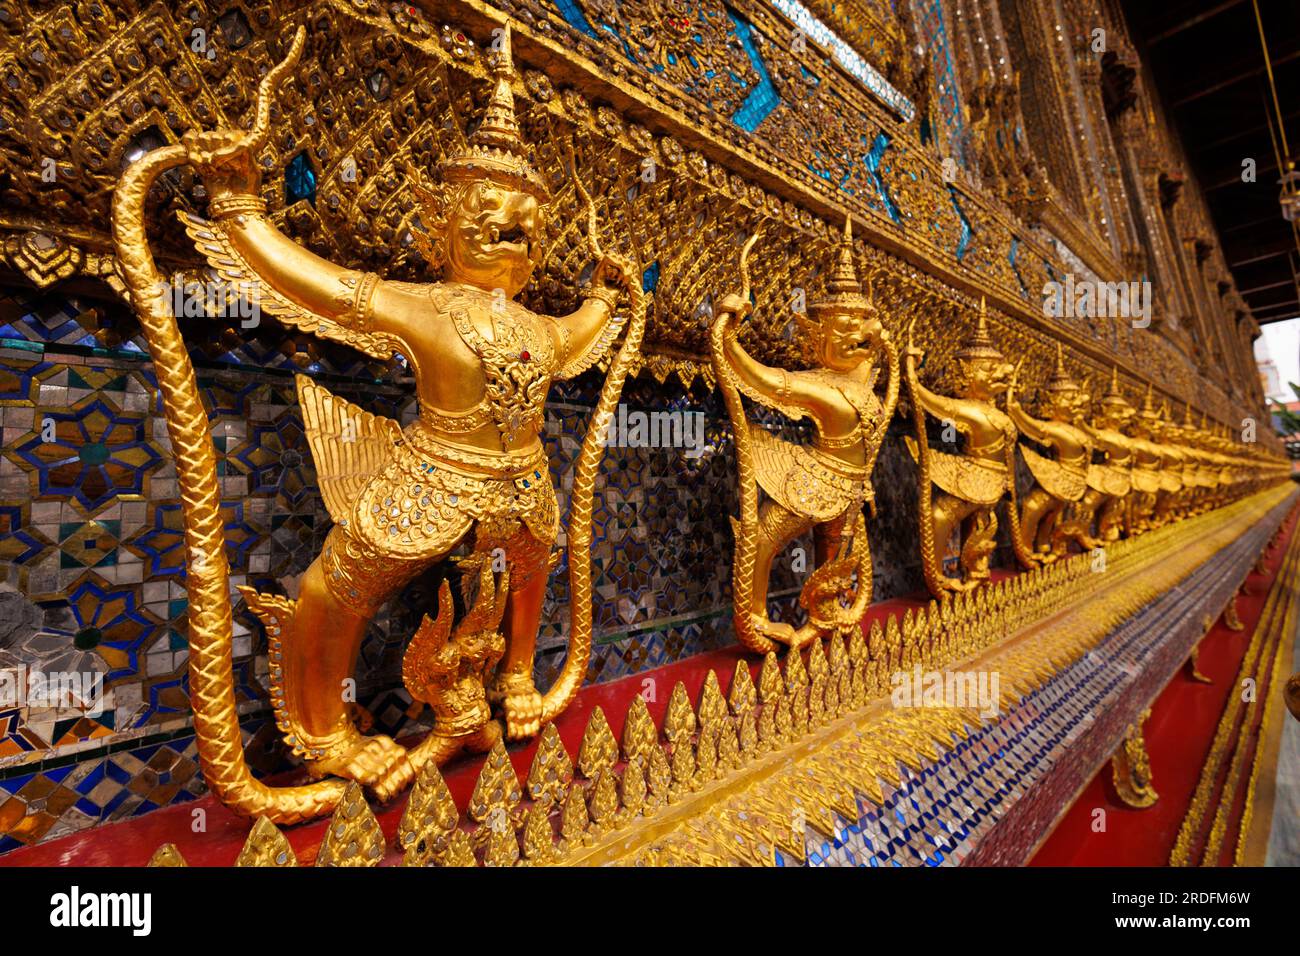 Golden figures of Garuda in the Grand Palace, Bangkok Thailand Stock Photo